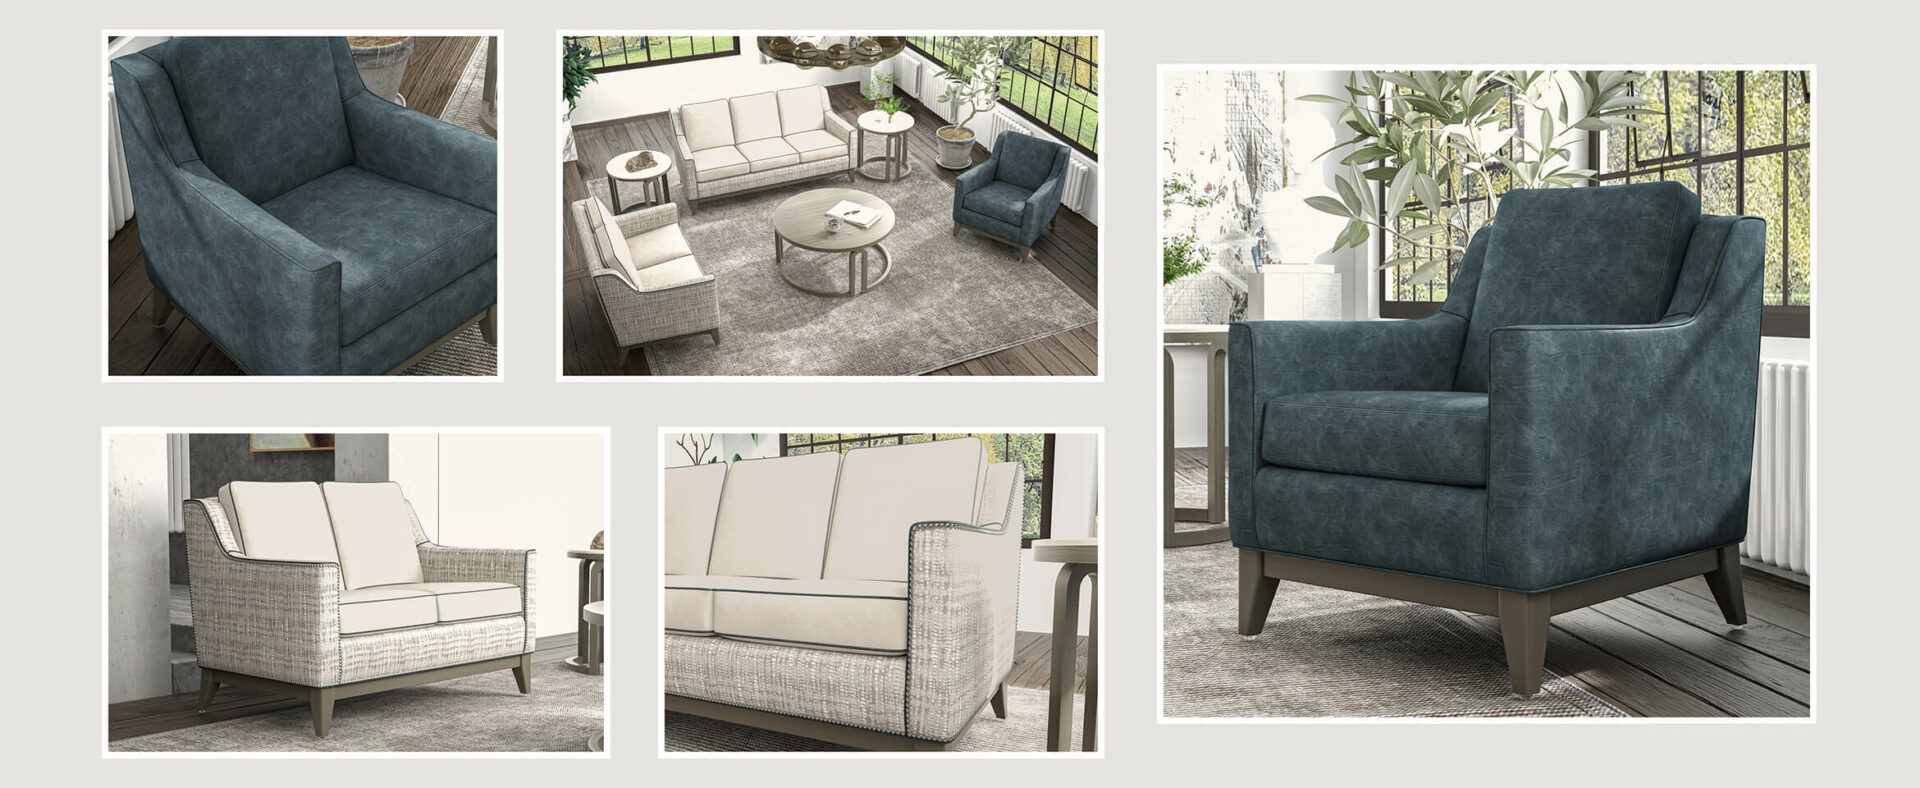 Gray toned living area furniture.